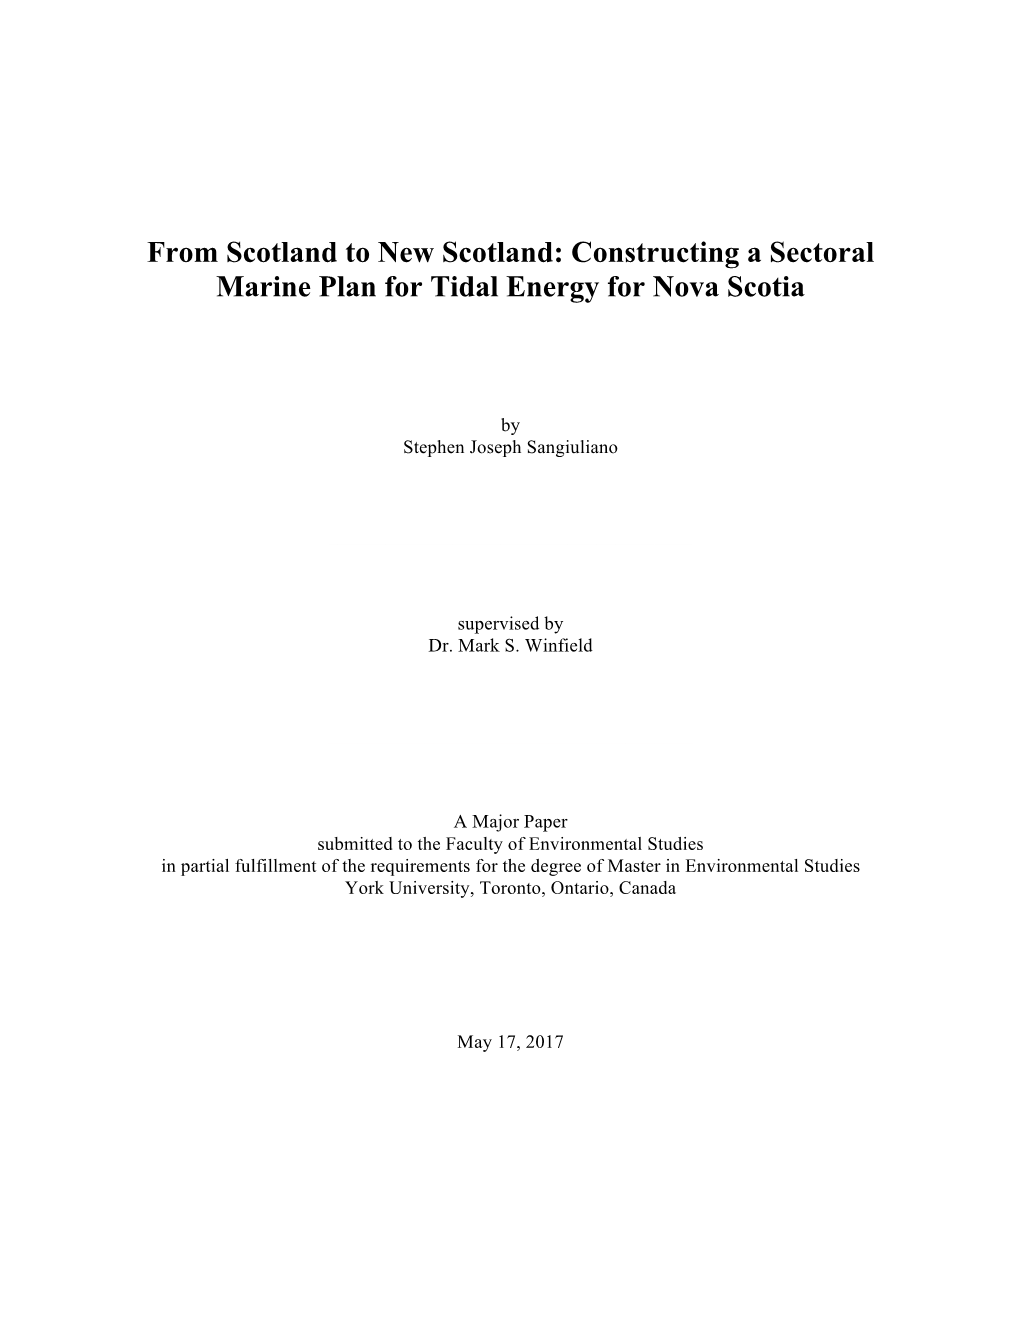 Constructing a Sectoral Marine Plan for Tidal Energy for Nova Scotia